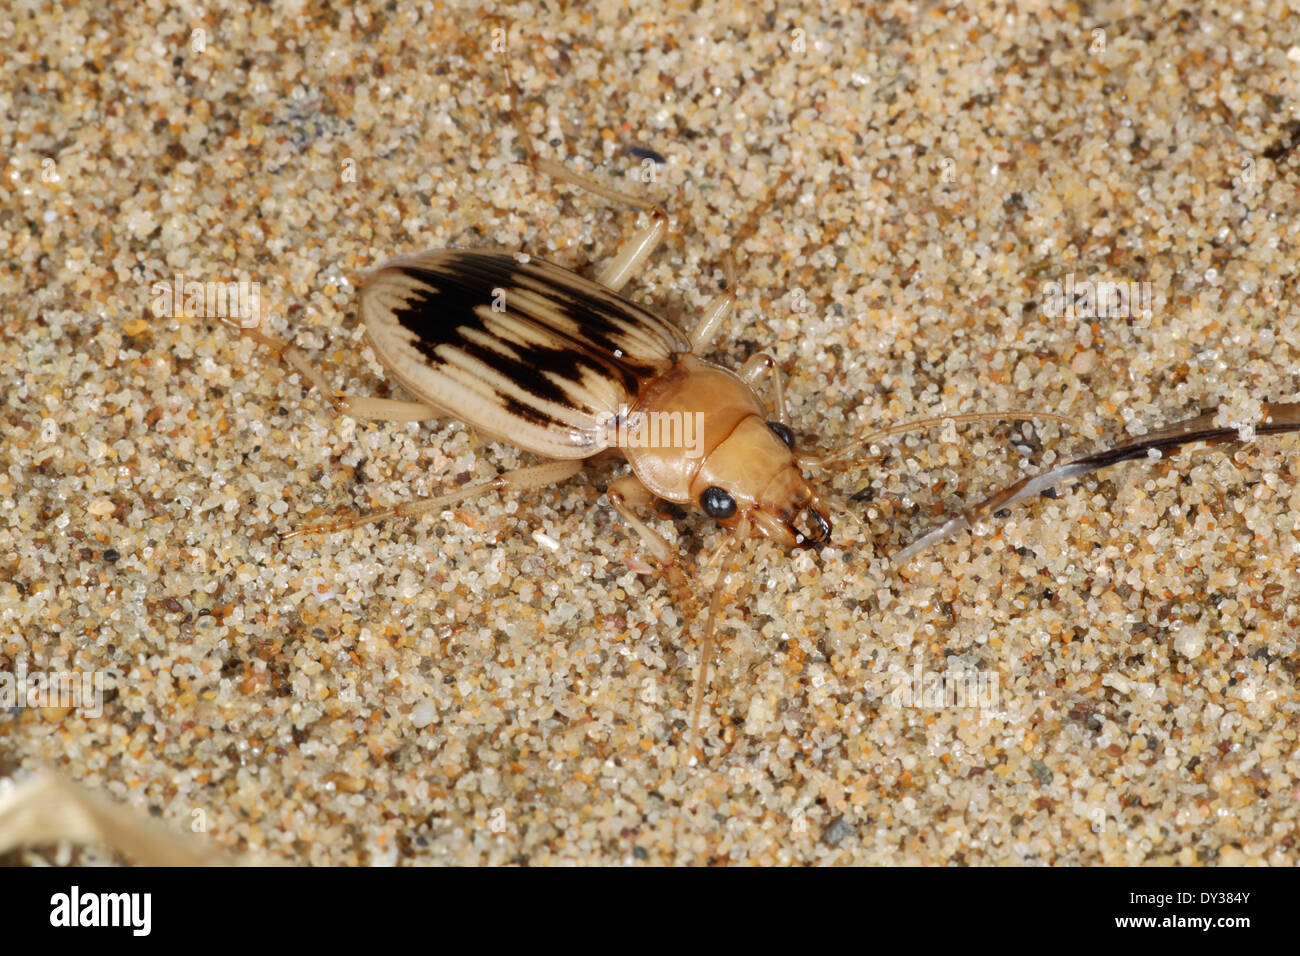 Beachcomber or Strandline Beetle - Eurynebria complanata Stock Photo